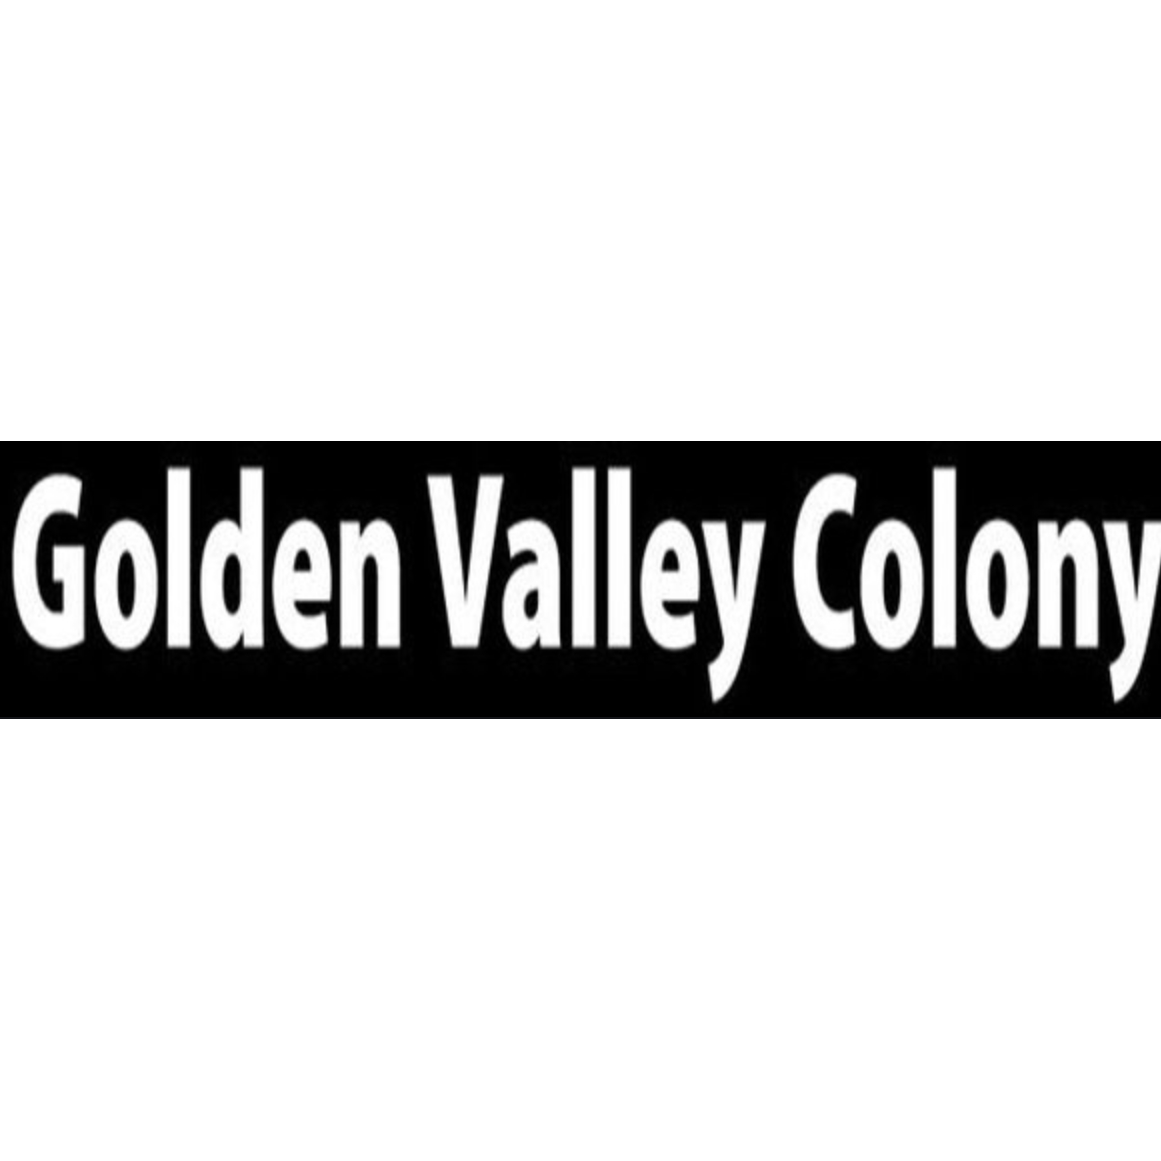 Golden Valley Colony